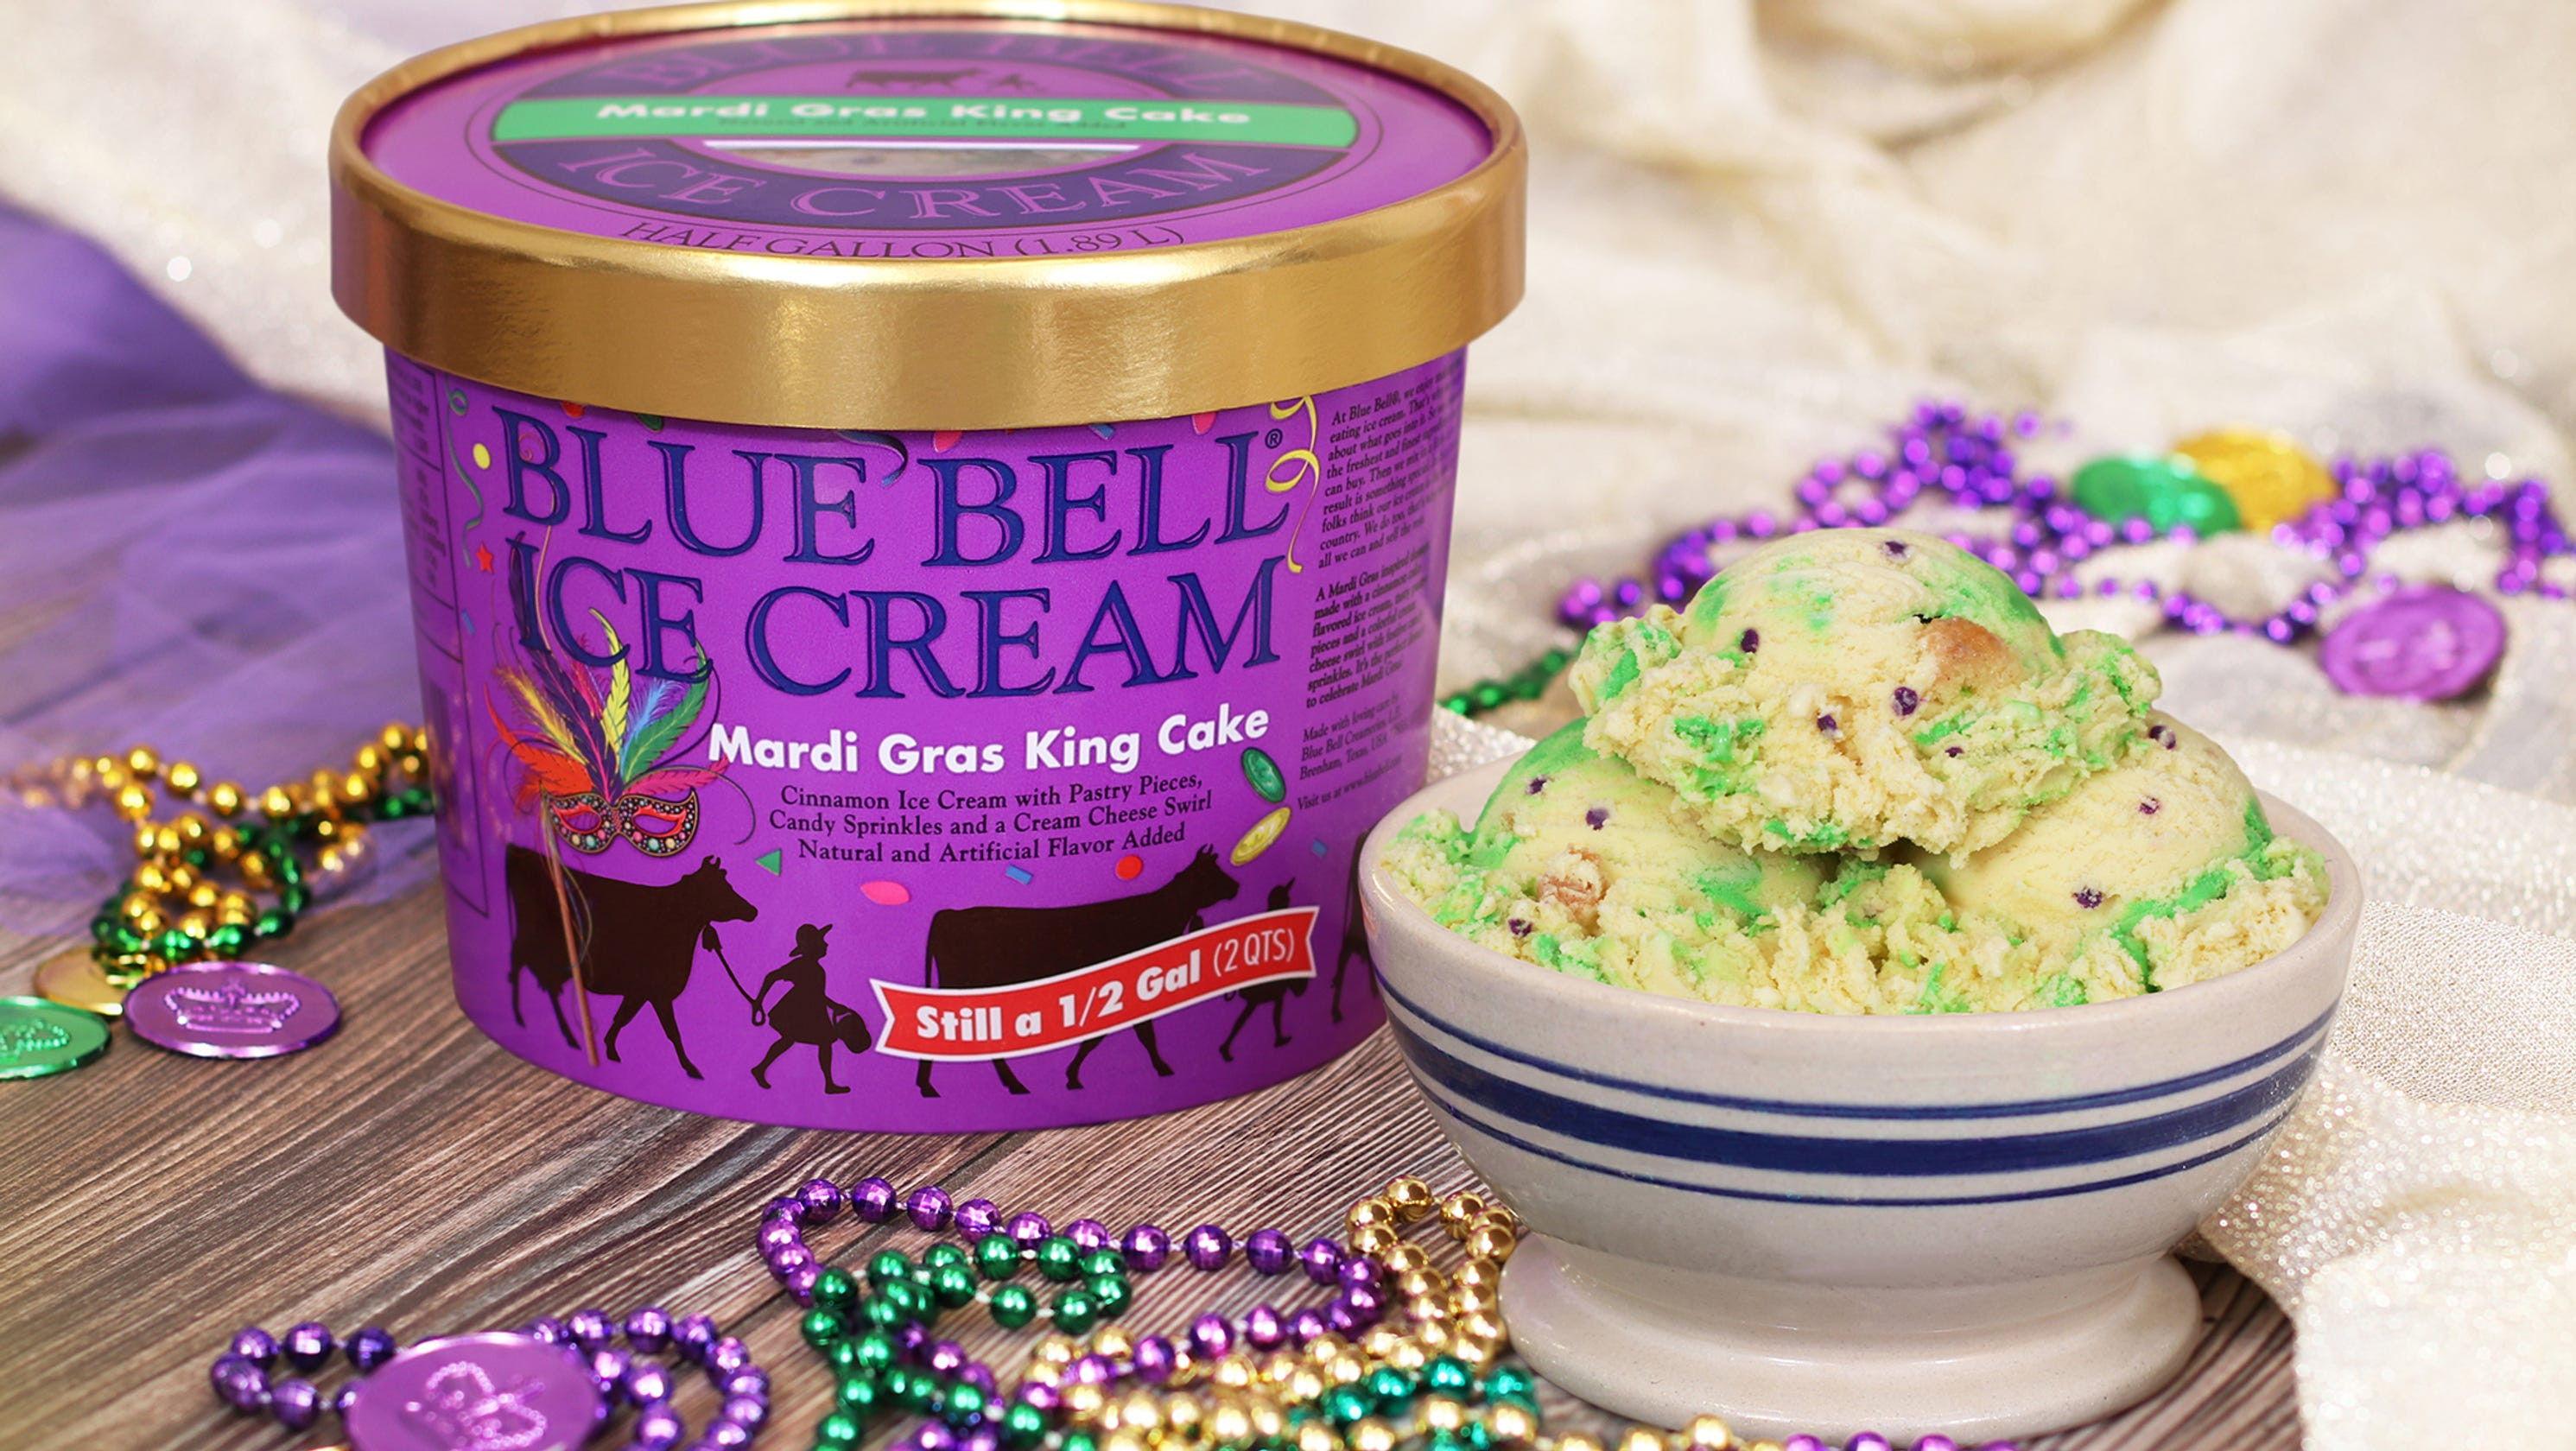 Blue Bell Birthday Cake Ice Cream
 Mardi Gras King Cake ice cream will be anywhere Blue Bell